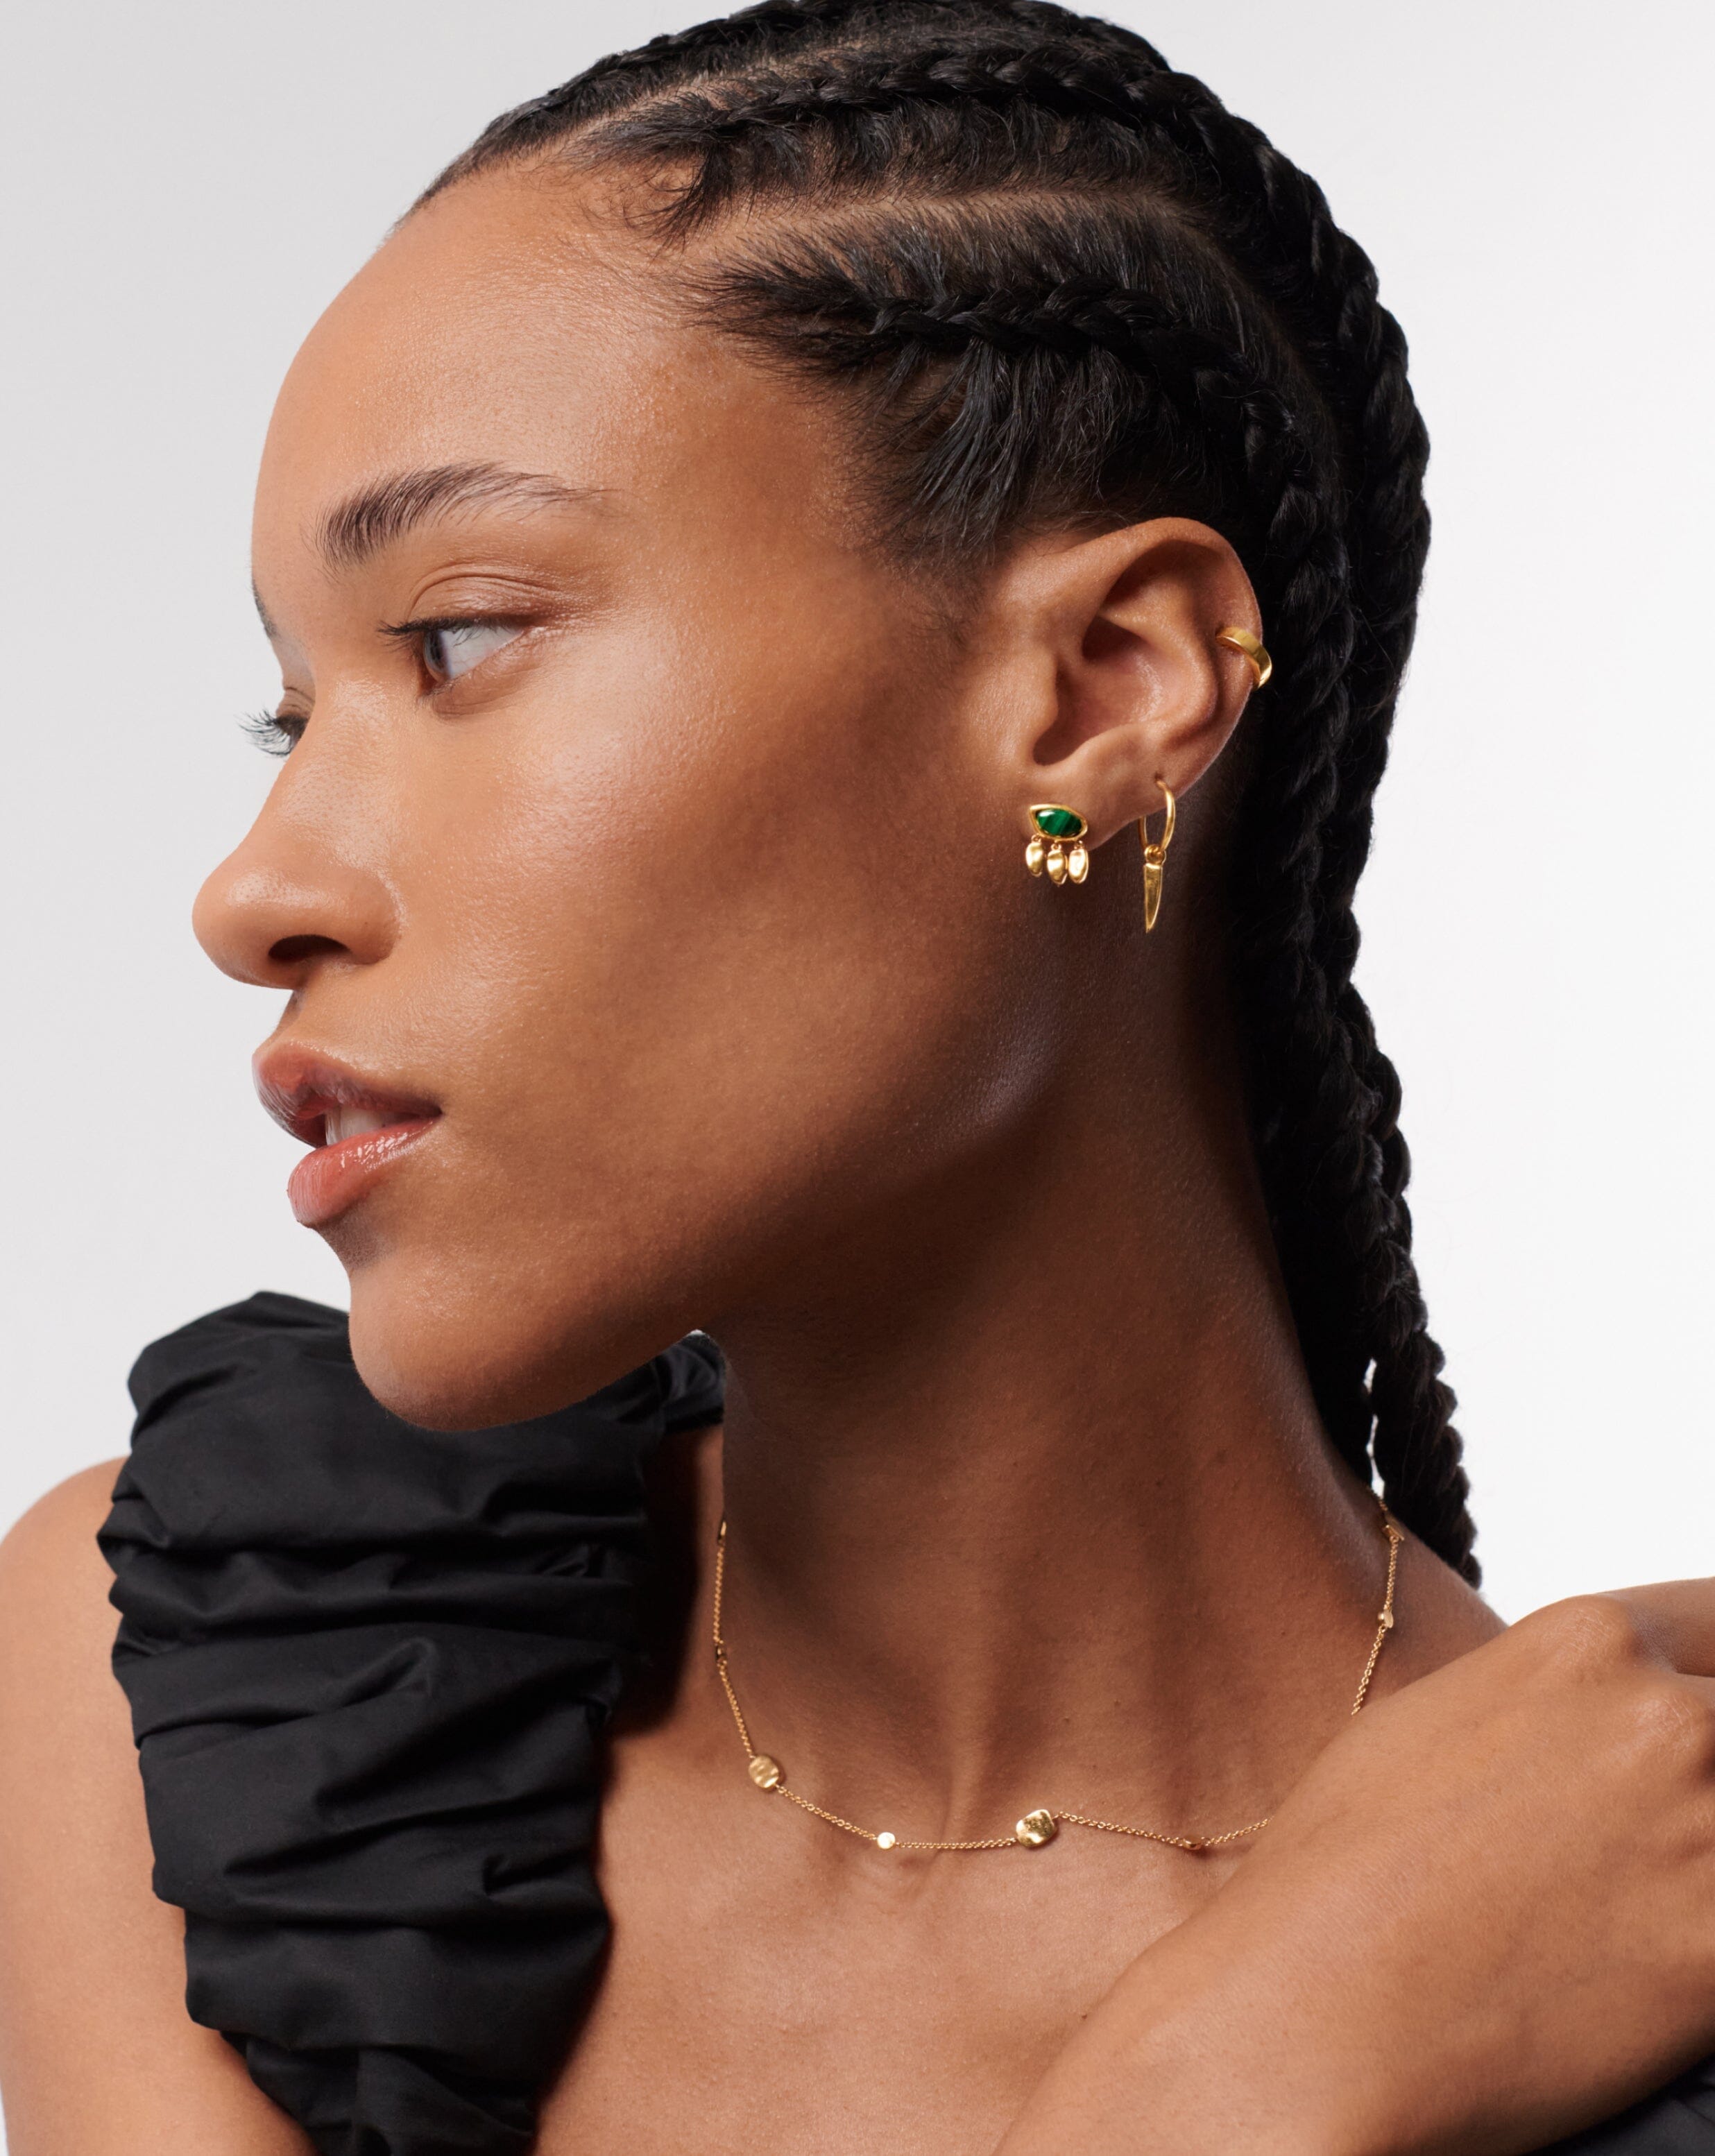 Molten Gemstone Charm Stud Earrings | 18ct Gold Plated Vermeil/Malachite Earrings Missoma 